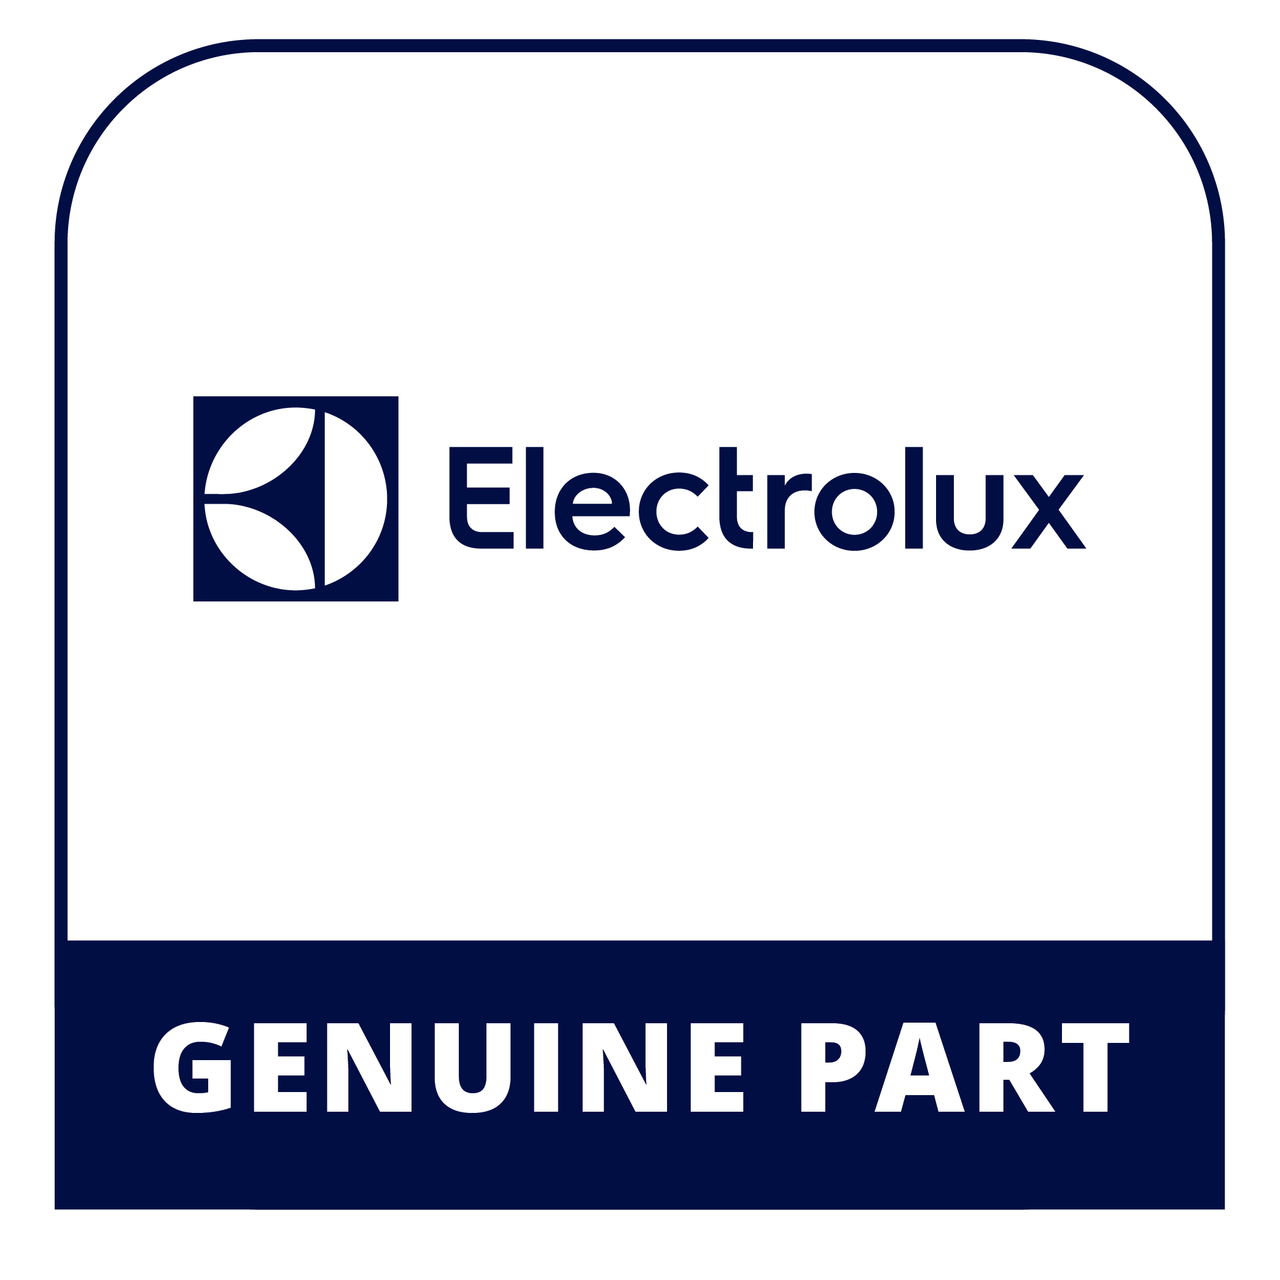 Frigidaire - Electrolux 5304495621 Panel - Genuine Electrolux Part